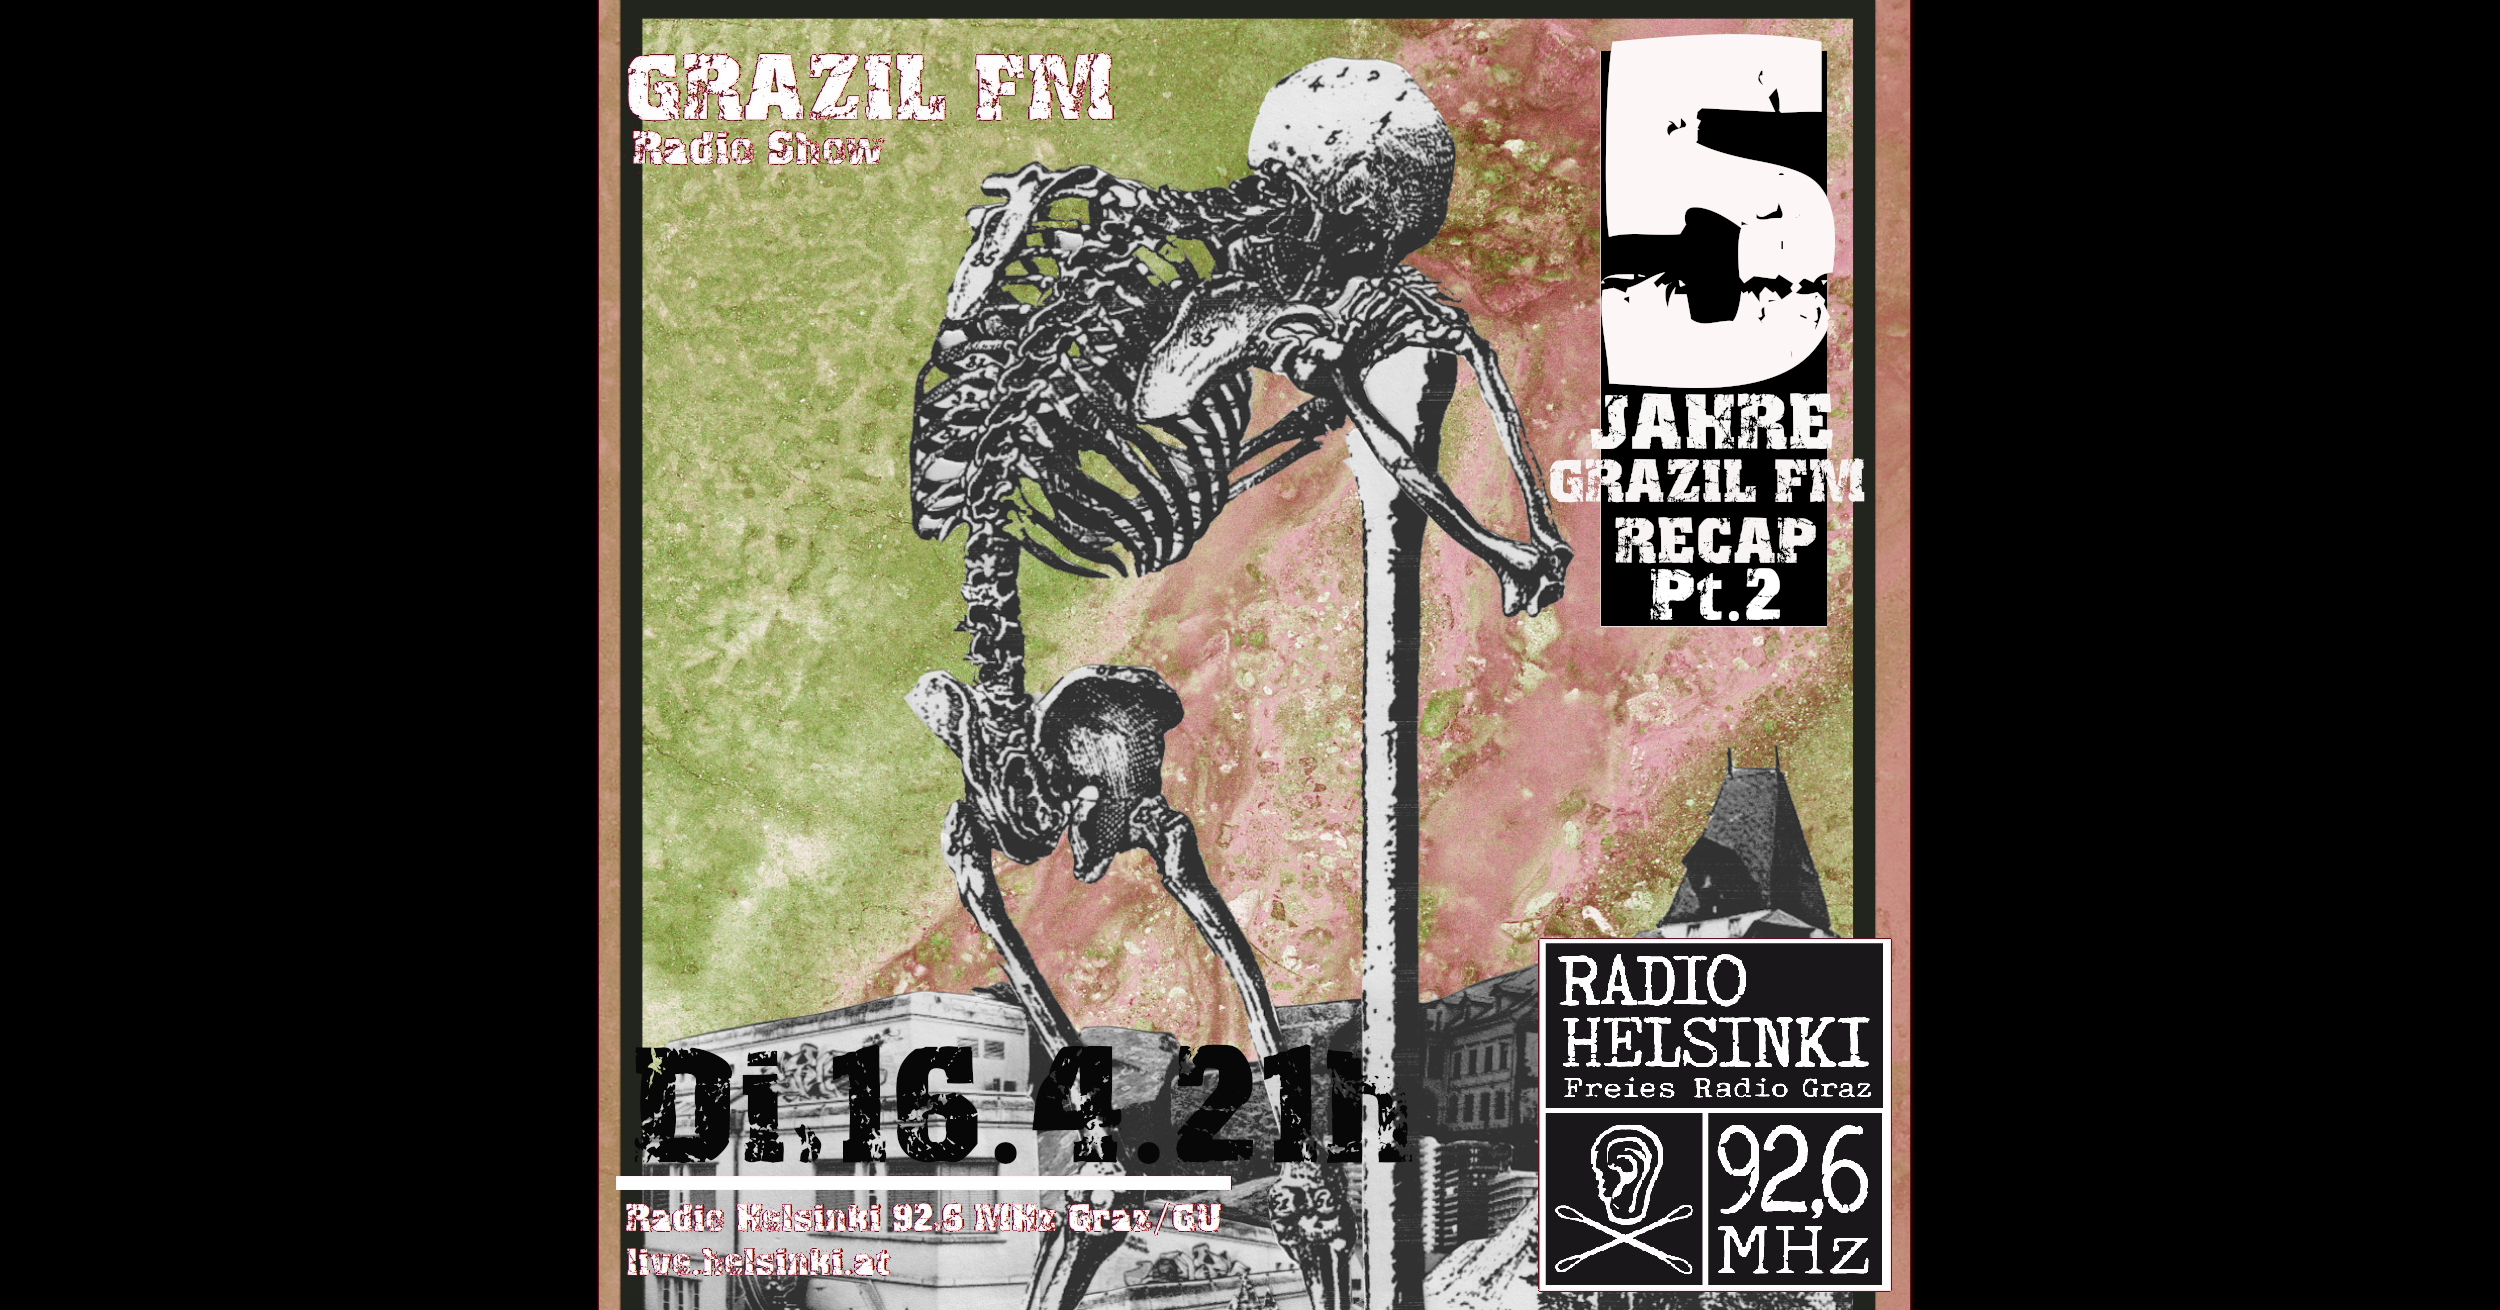 5 Jahre grazil FM Recap Show Pt2 grazil Records Radio Helsinki Nekrodeus Cle Pecher